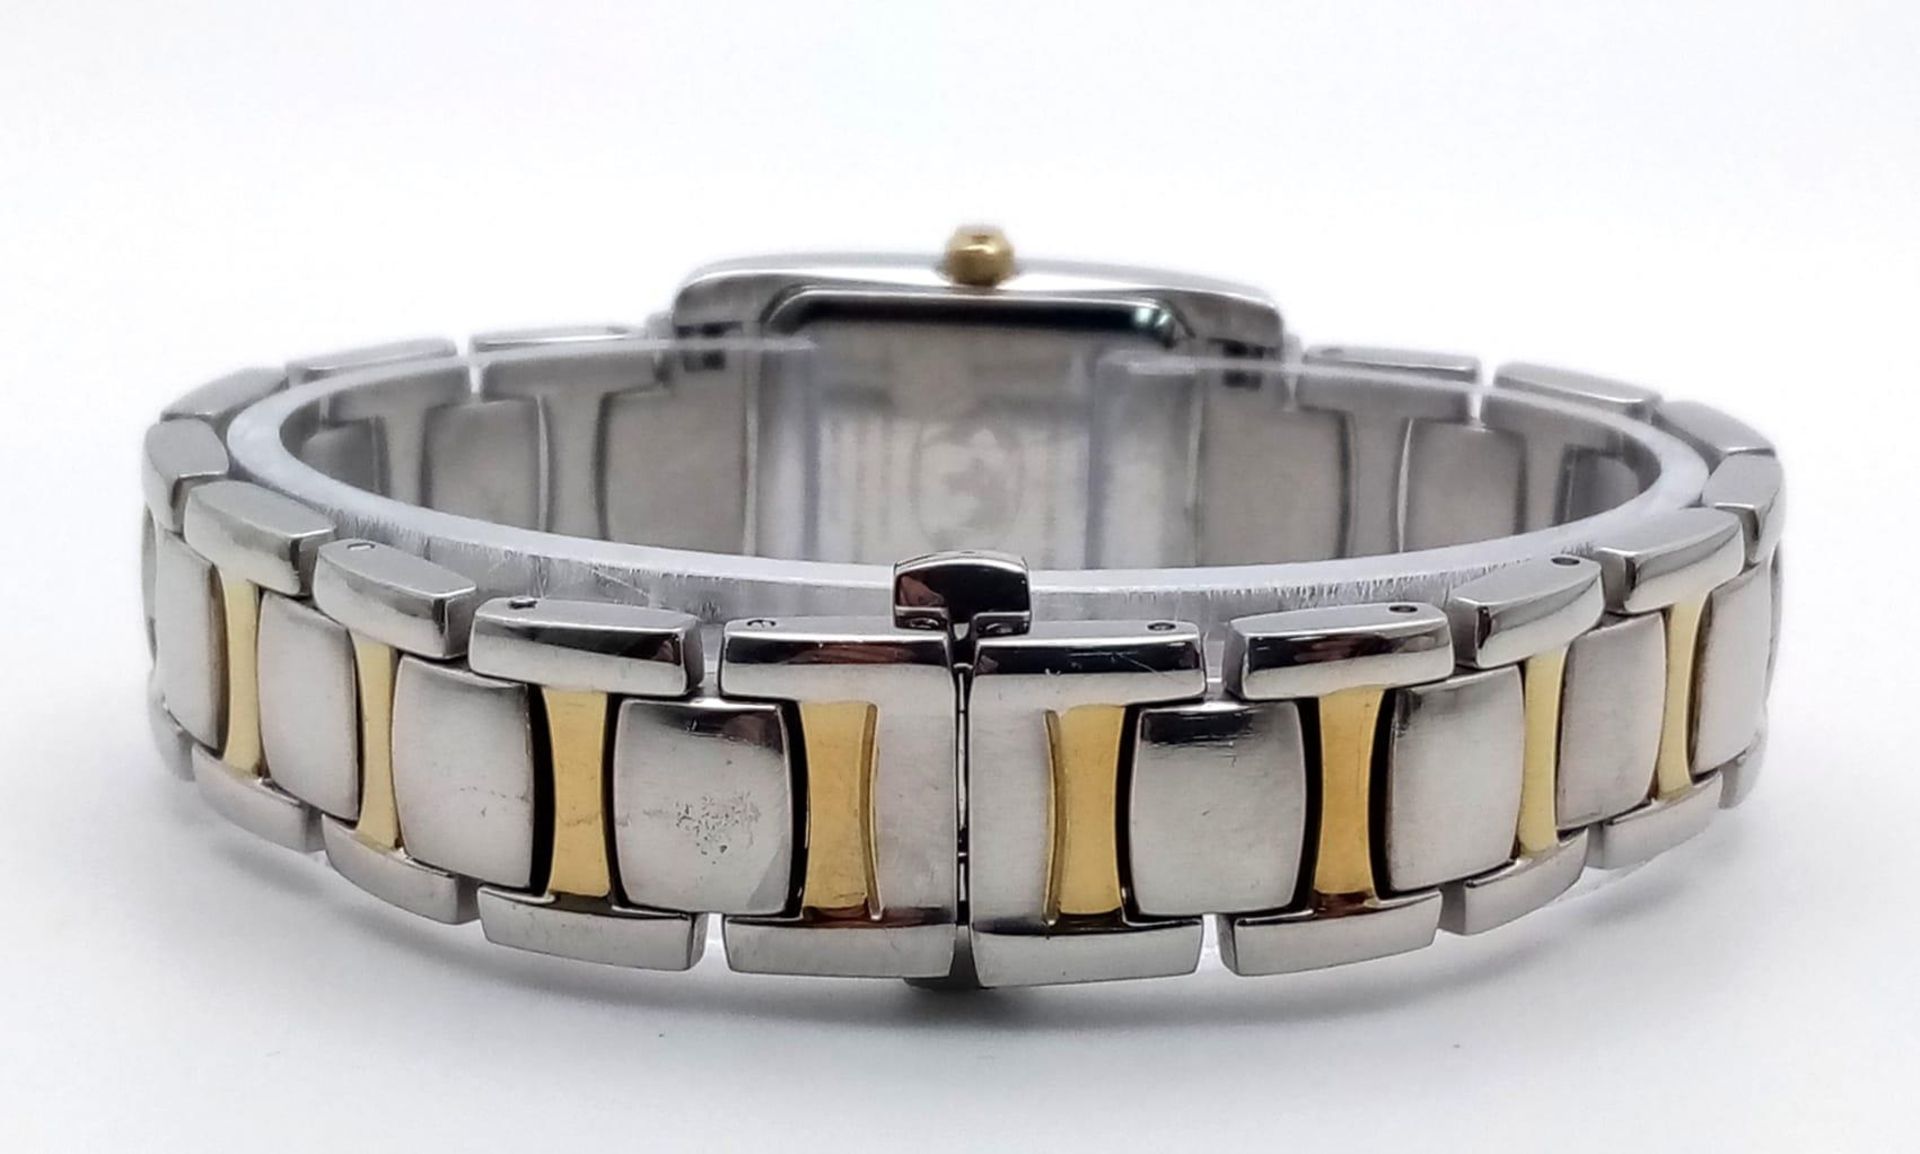 A Ladies Rotary, Bi-Metal, Stone Bezel Set Bracelet Watch Model LB02796.06. Full Working Order and - Image 4 of 6